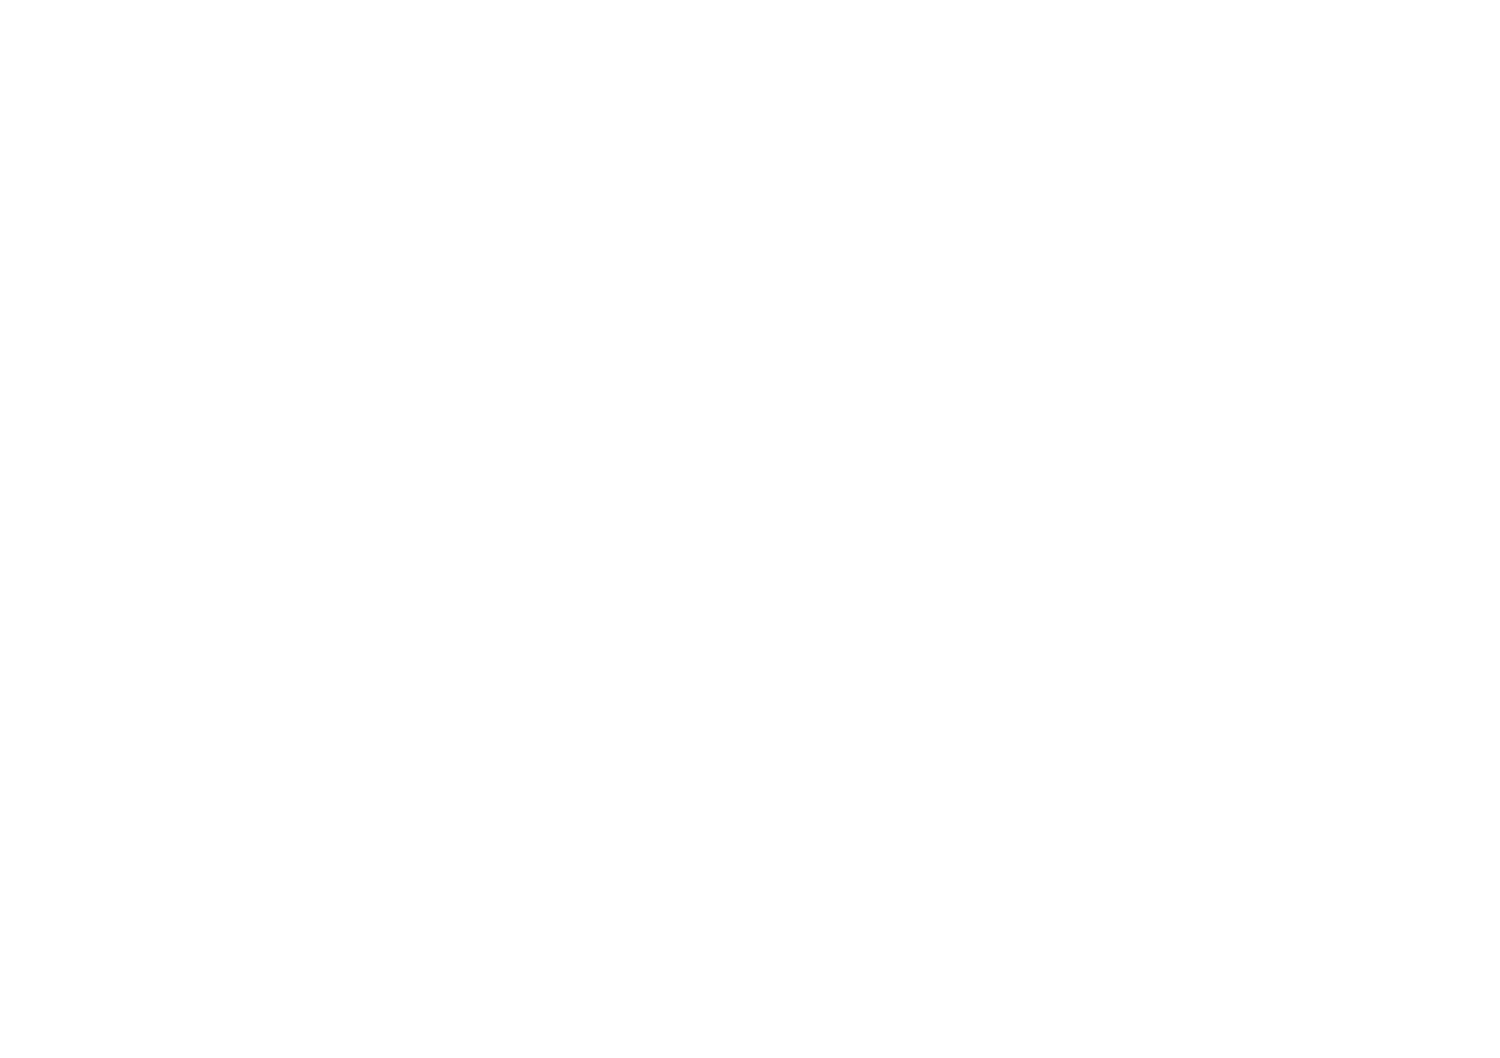 Geoff Okarma Construction, Inc.